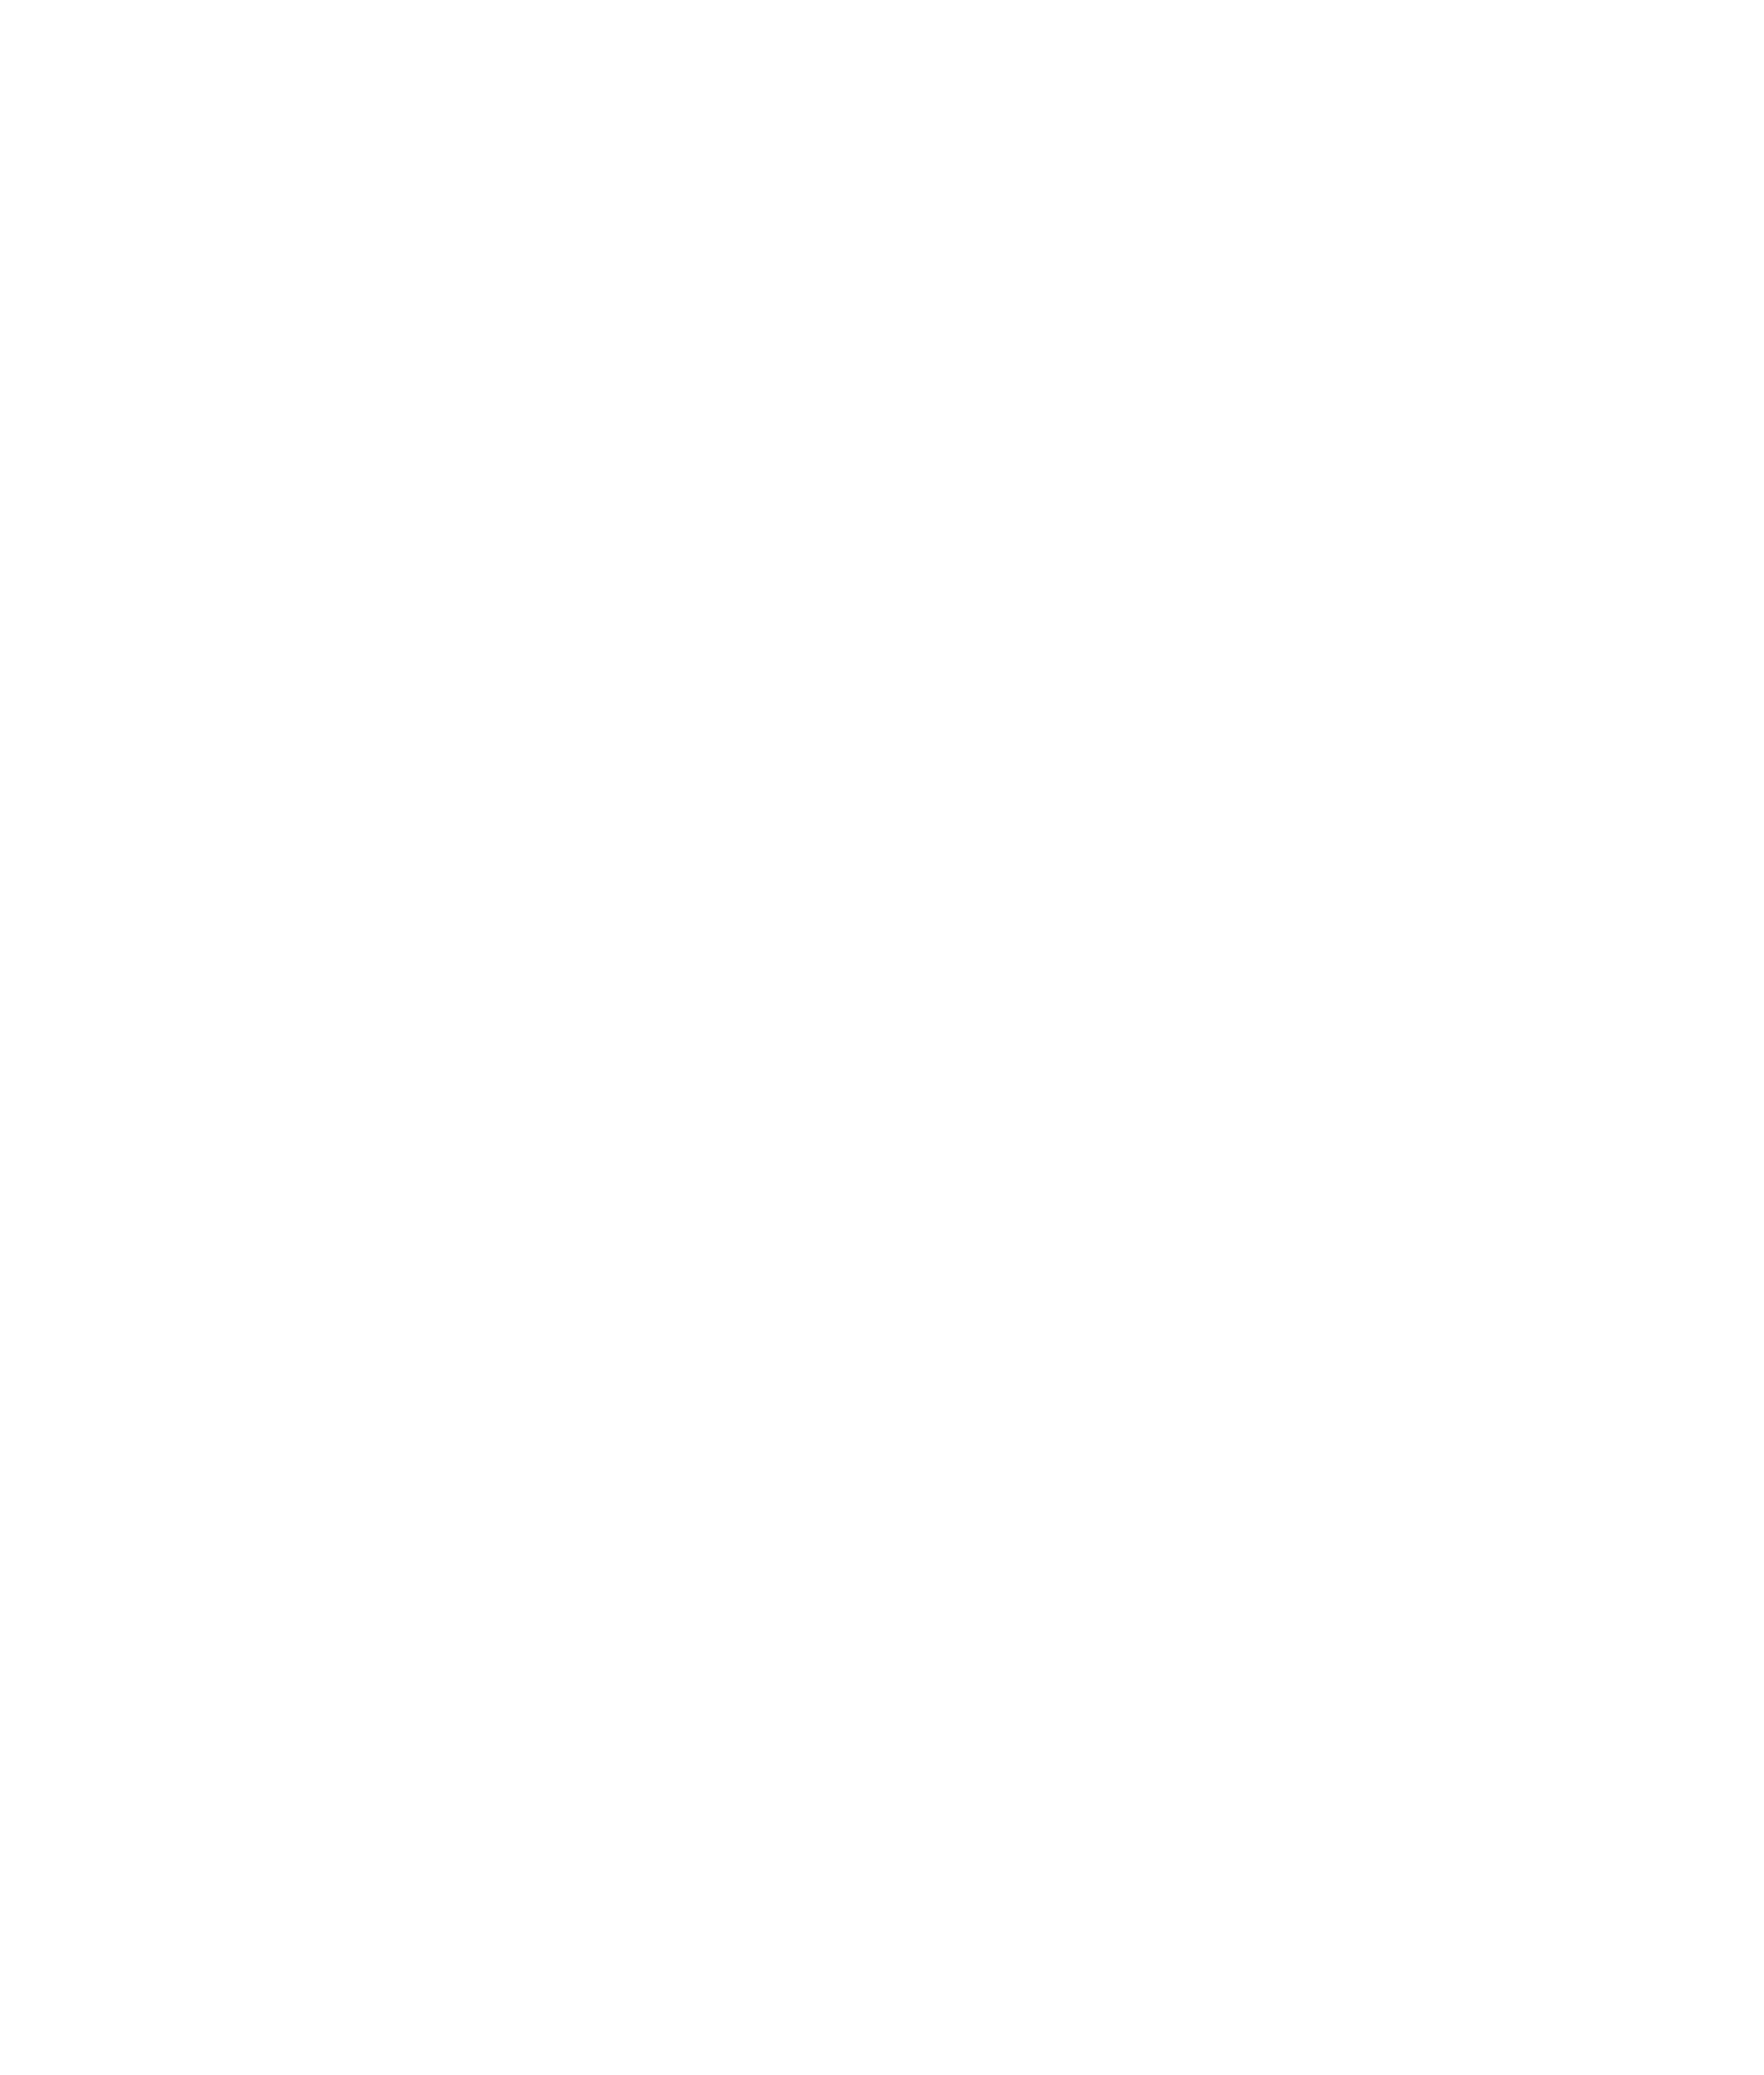 Travelers choice 2023 award by trip advisor - Karibu camps accreditations